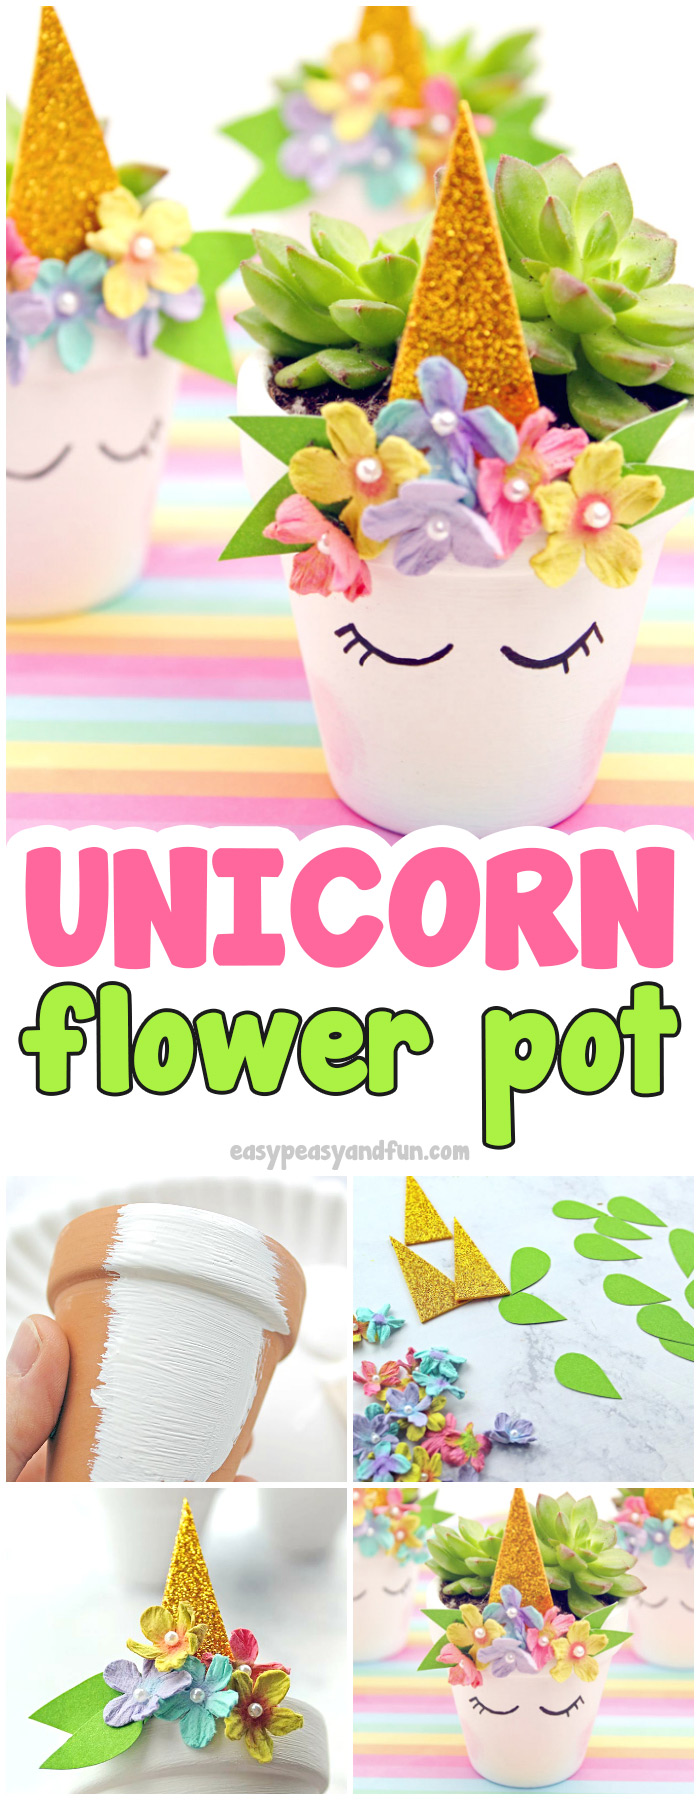 DIY Unicorn Planter Craft Idea #craftsforkids #flowerporcrafts #unicorncrafts